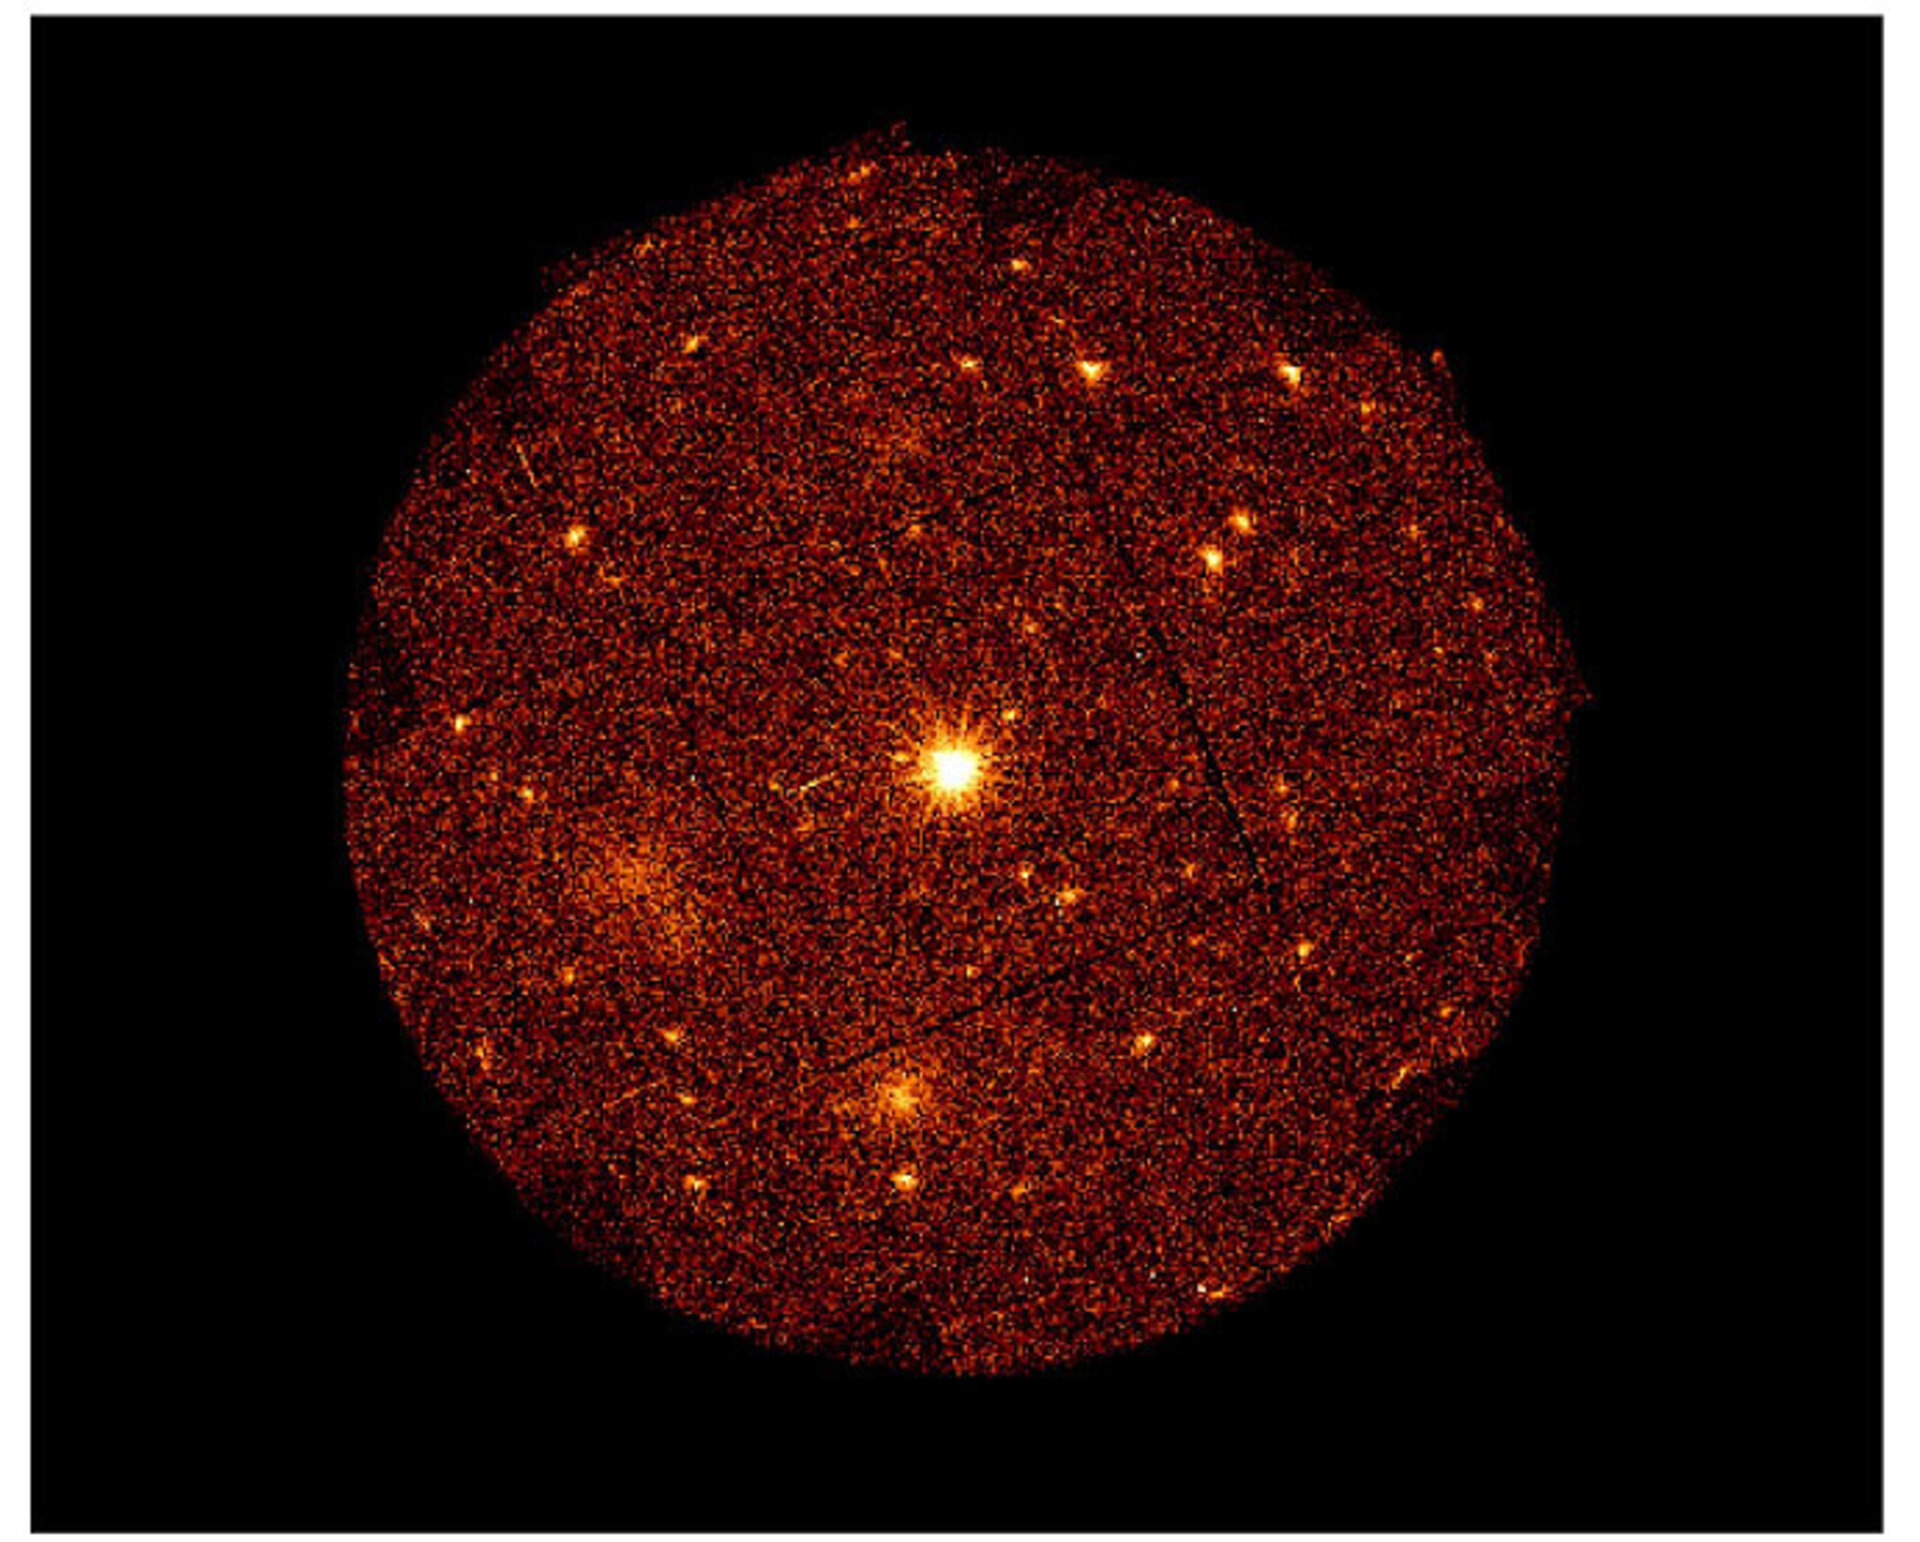 X-ray image of the neutron star 'PSR B1055-52'